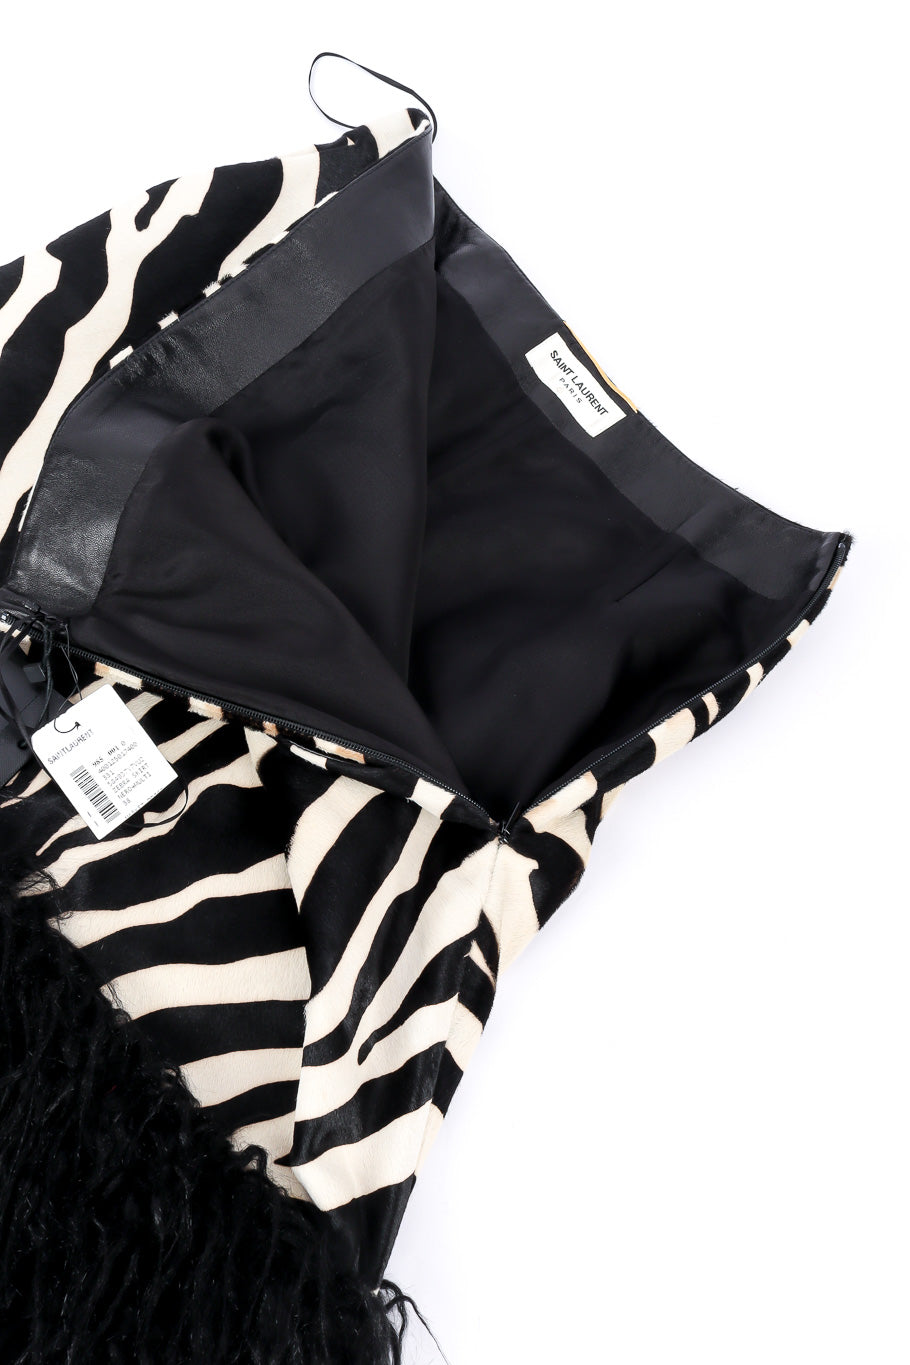 Saint Laurent 2019 F/W Zebra Print Midi Skirt unzipped laid flat on a white background @Recessla